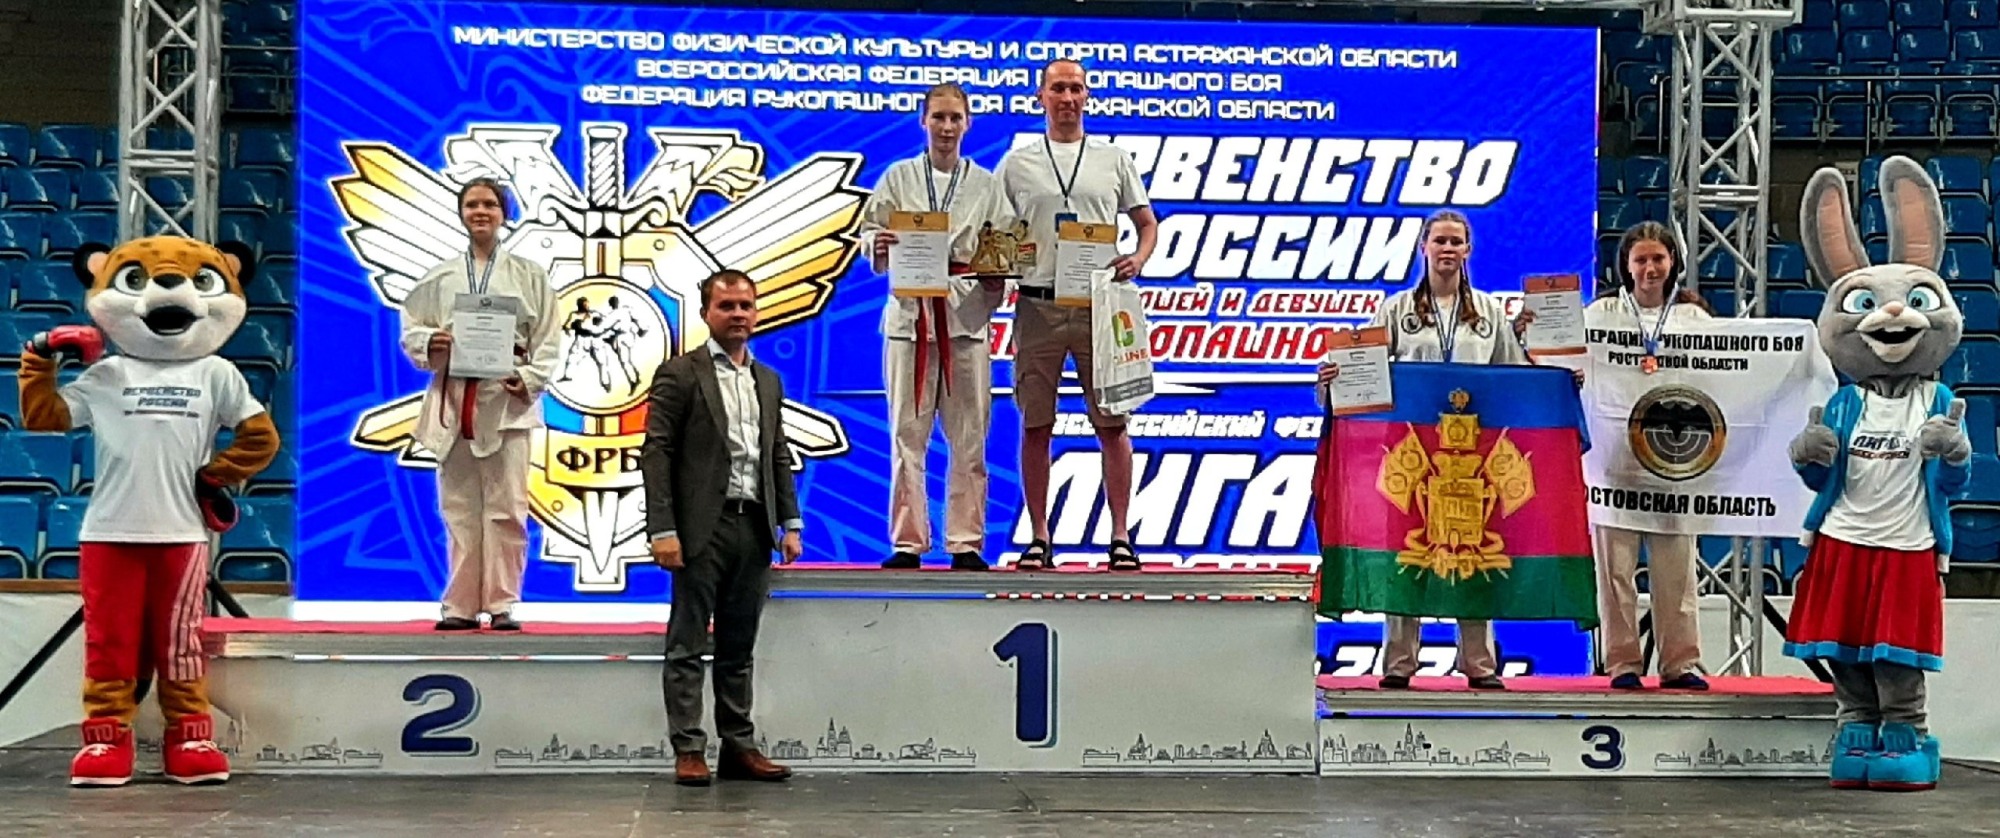 Рукопашники Александра Дроздова и Трофим Суроегин вернулись с медалями из Астрахани